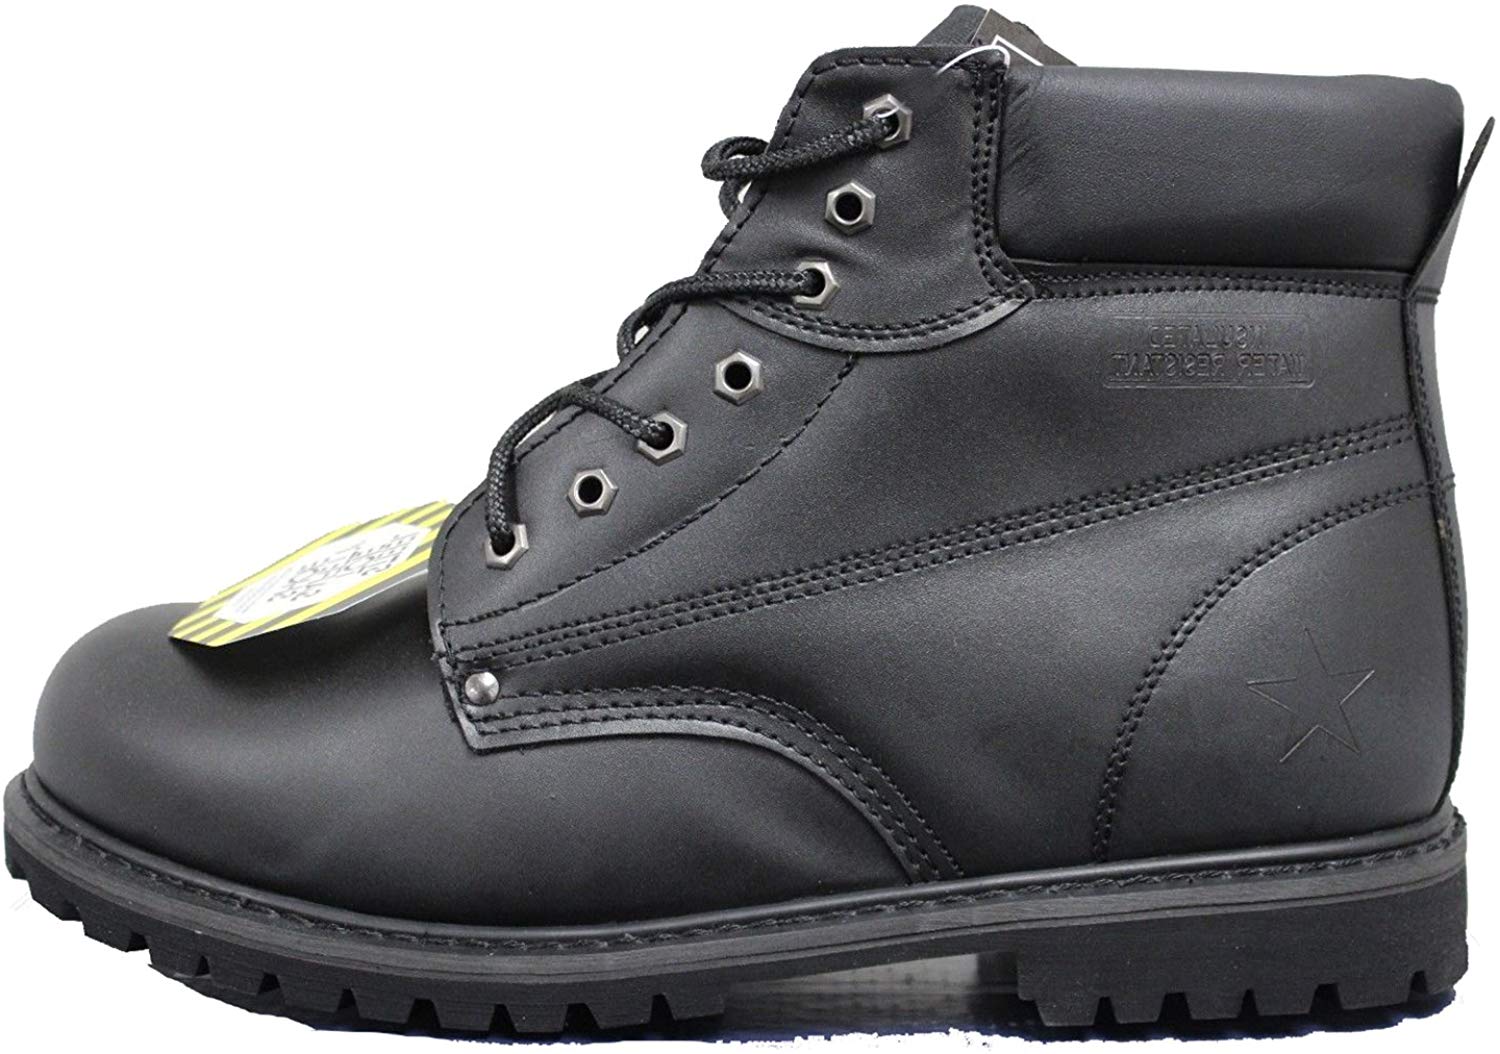 Men's Steel Toe Work Boots 6" Leather Lug Sole Water Resistant Slip /Oil Resistant - image 2 of 4